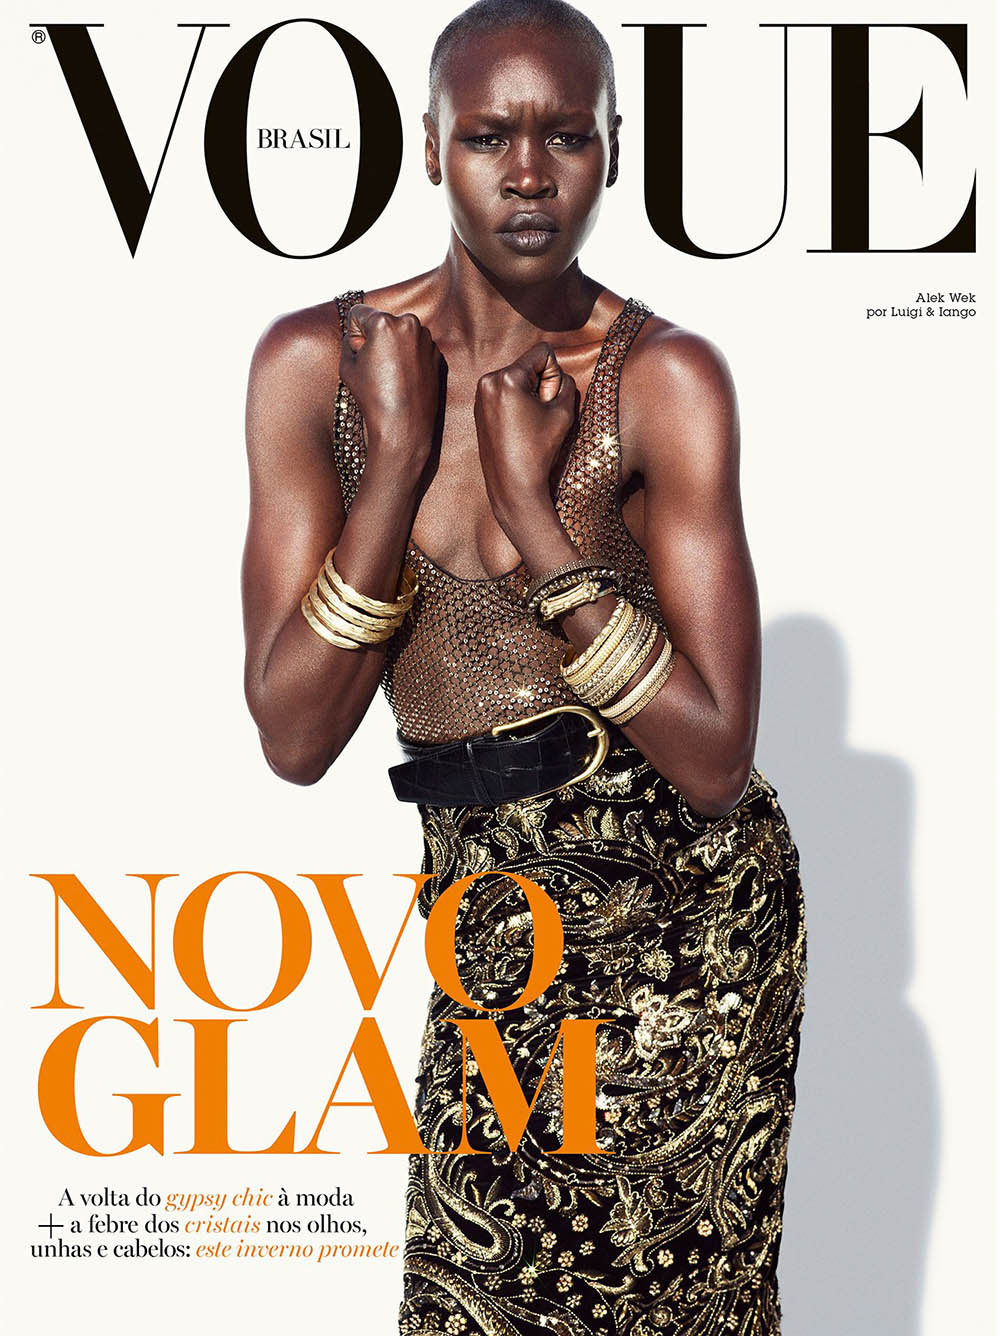 Alek Wek covers Vogue Brazil March 2020 by Luigi & Iango